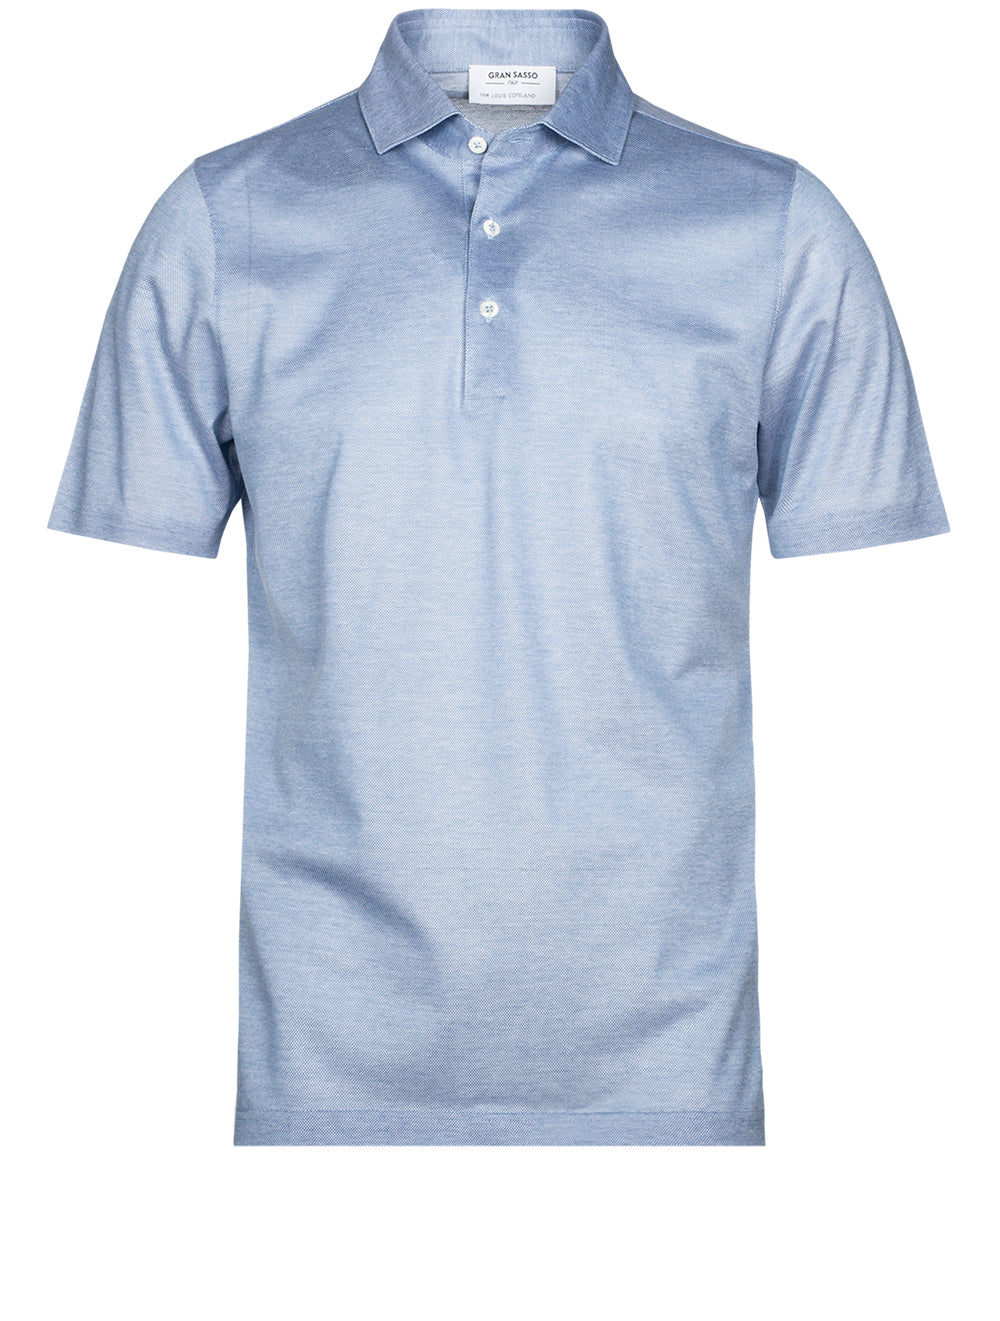 3 button Polo Shirt Light Blue